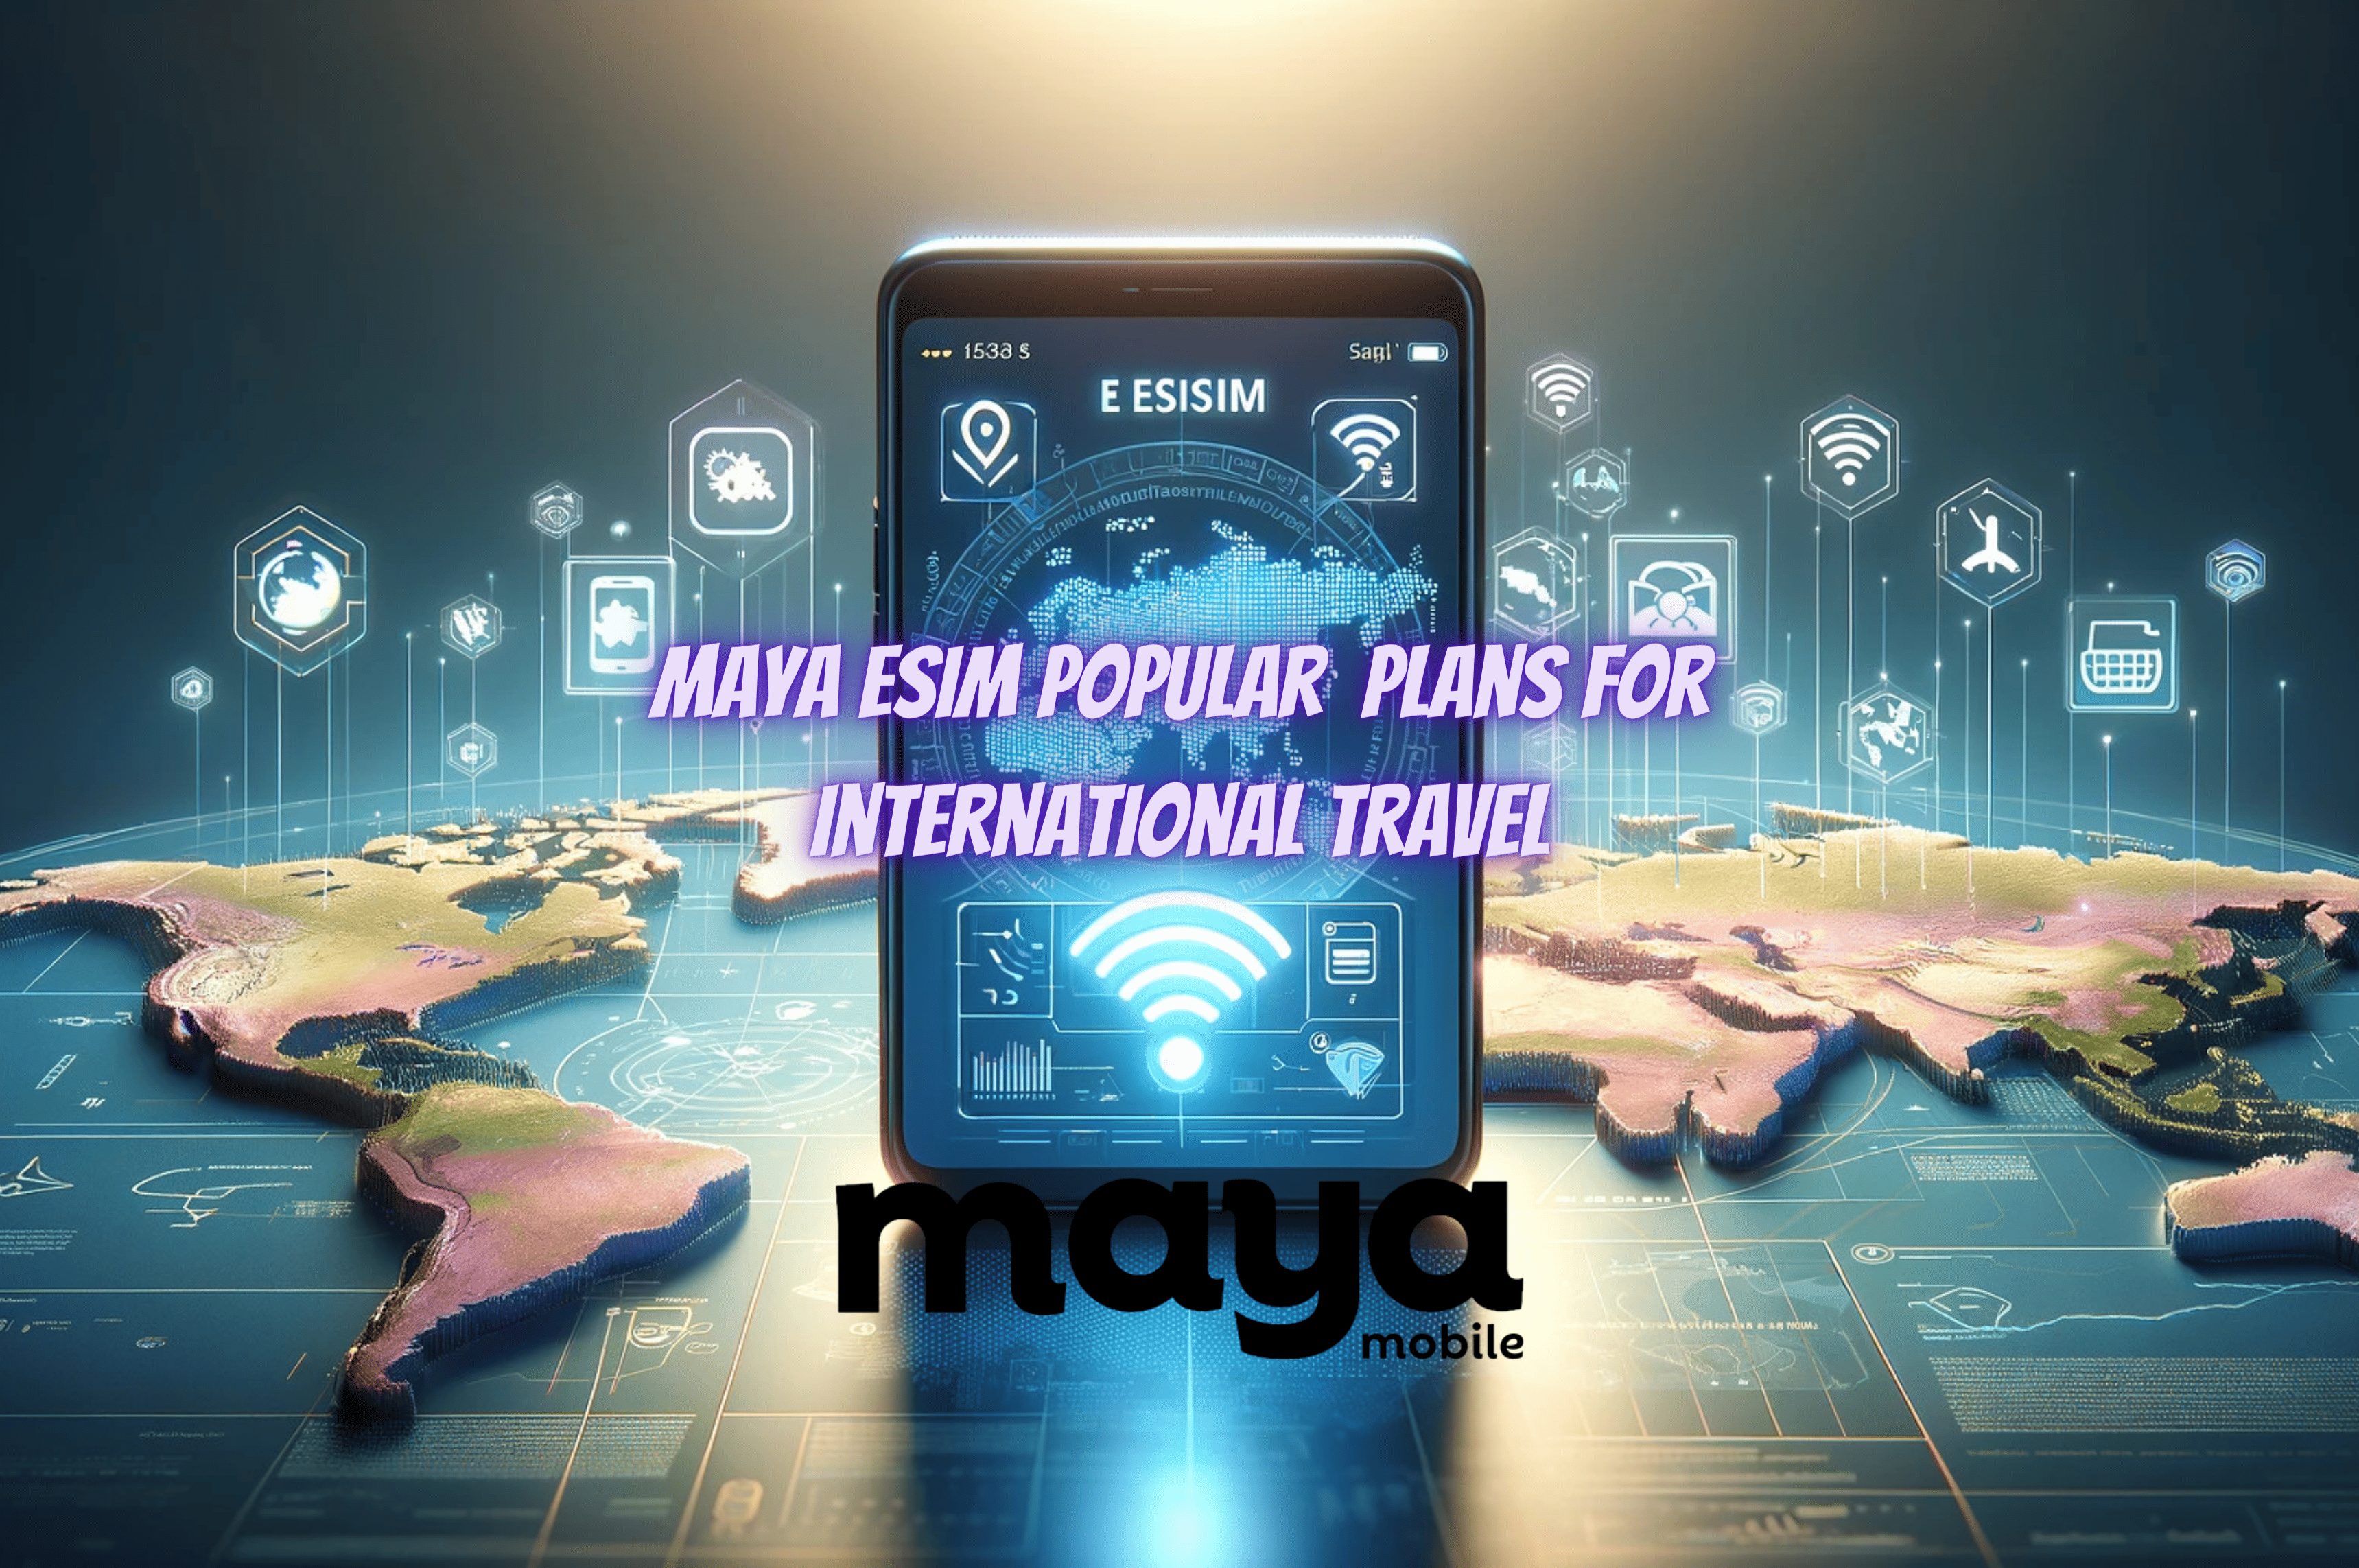 MAYA eSIM 5 Popular Global and Regional Plans for International Travel